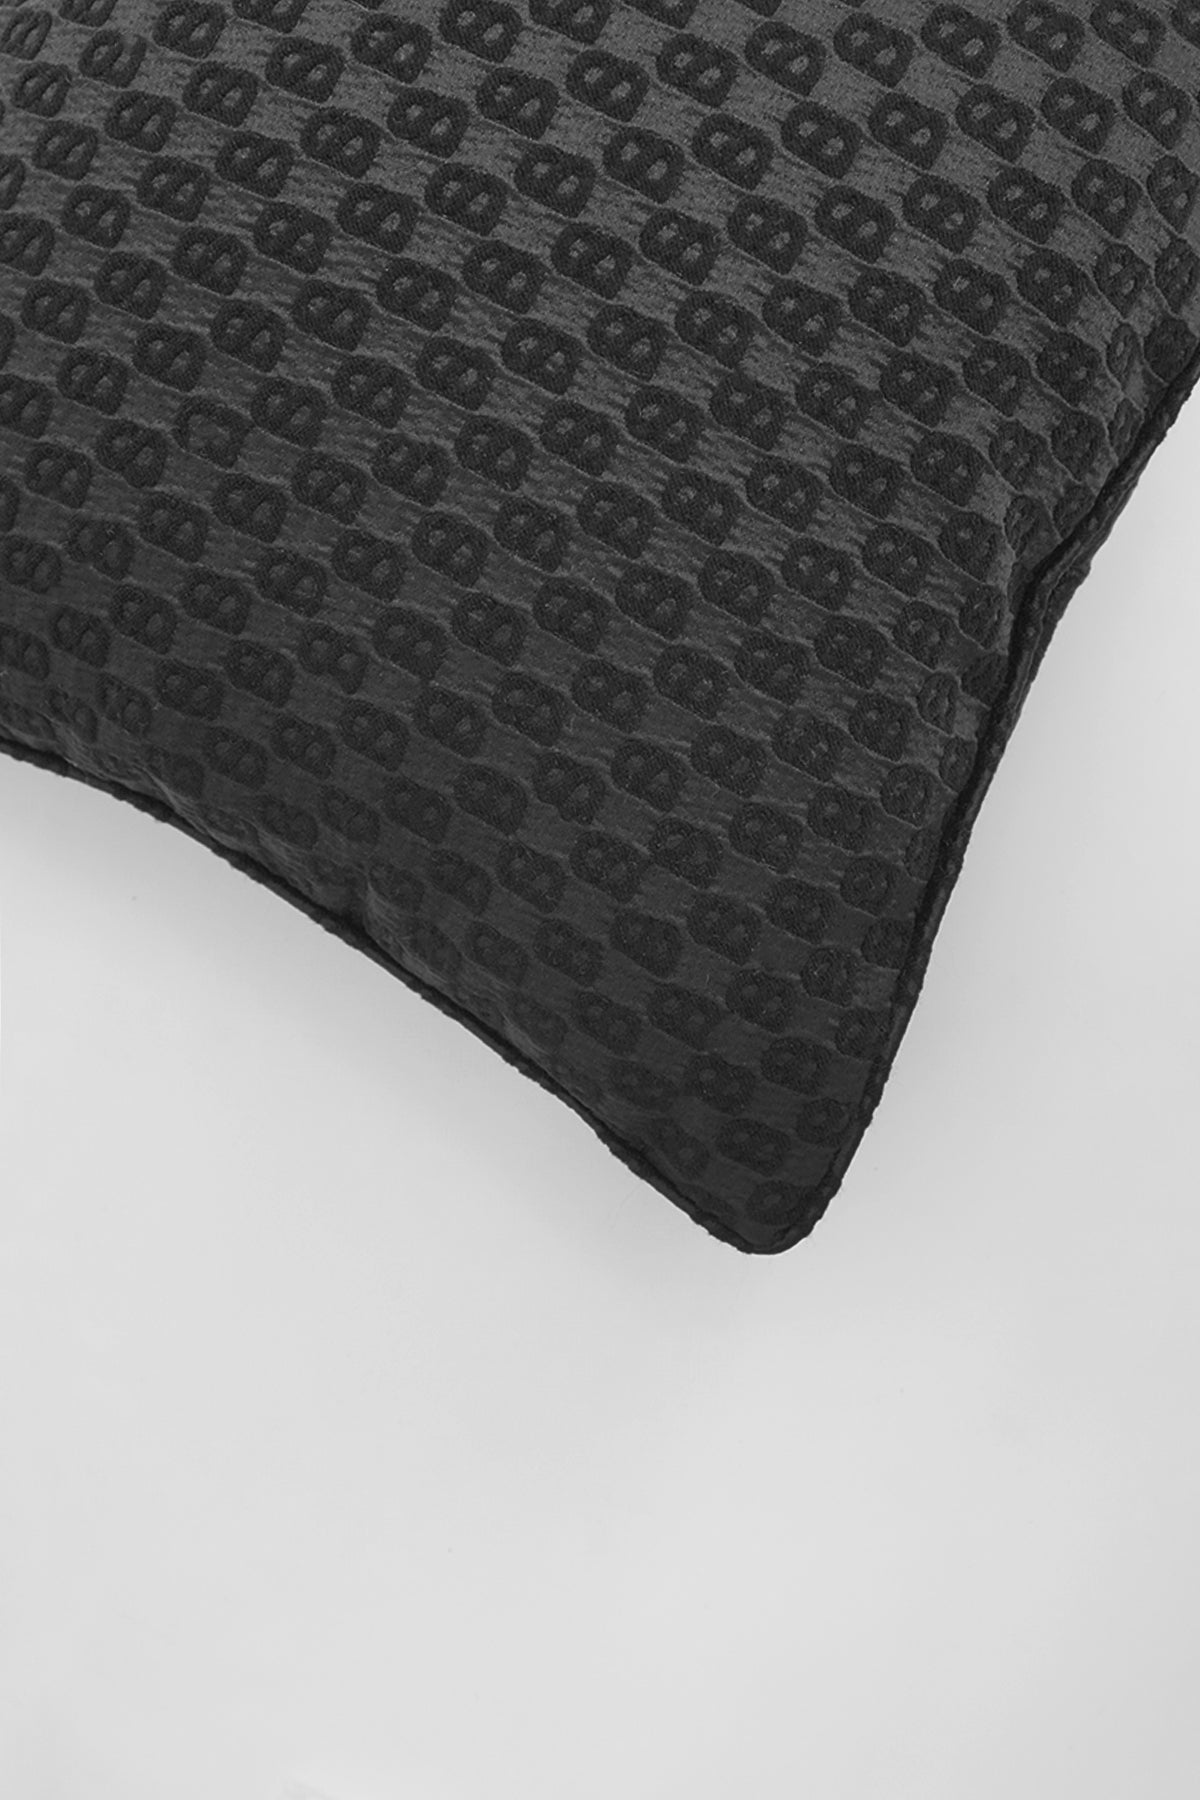 Signature Jacquard Cushion Cover 40cm - Black